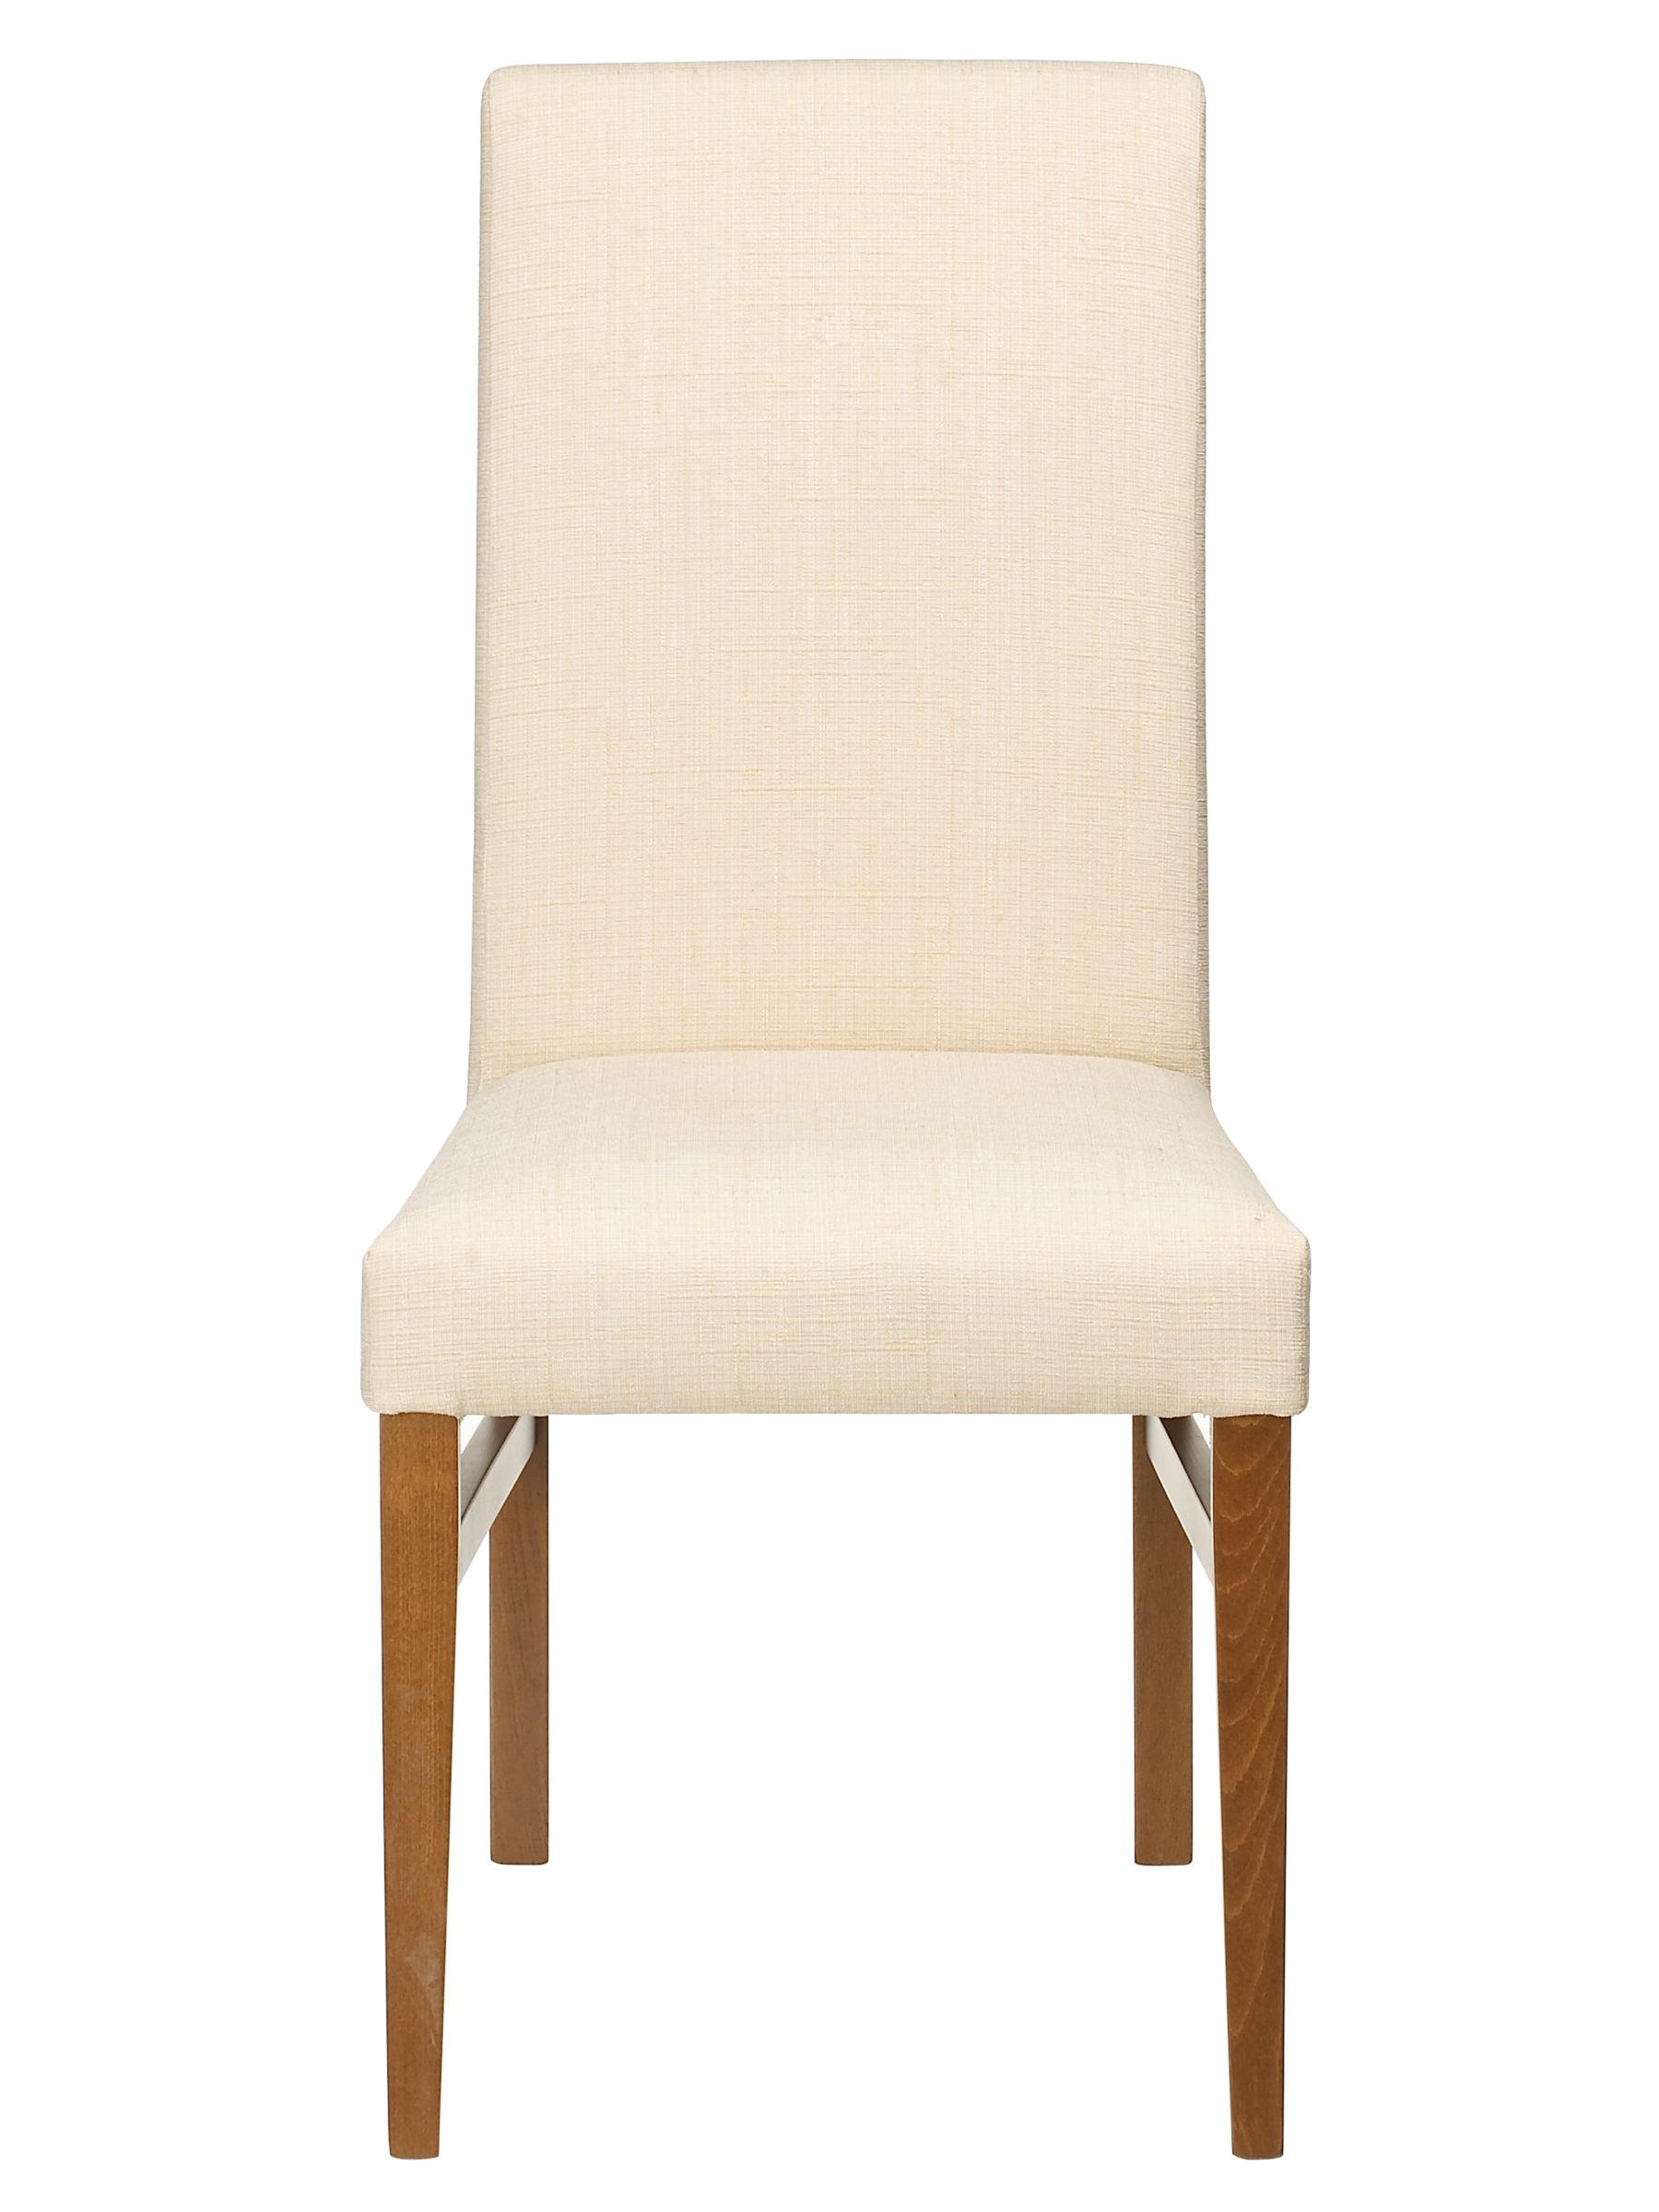 Sumba Dining Chair, Beige Fabric